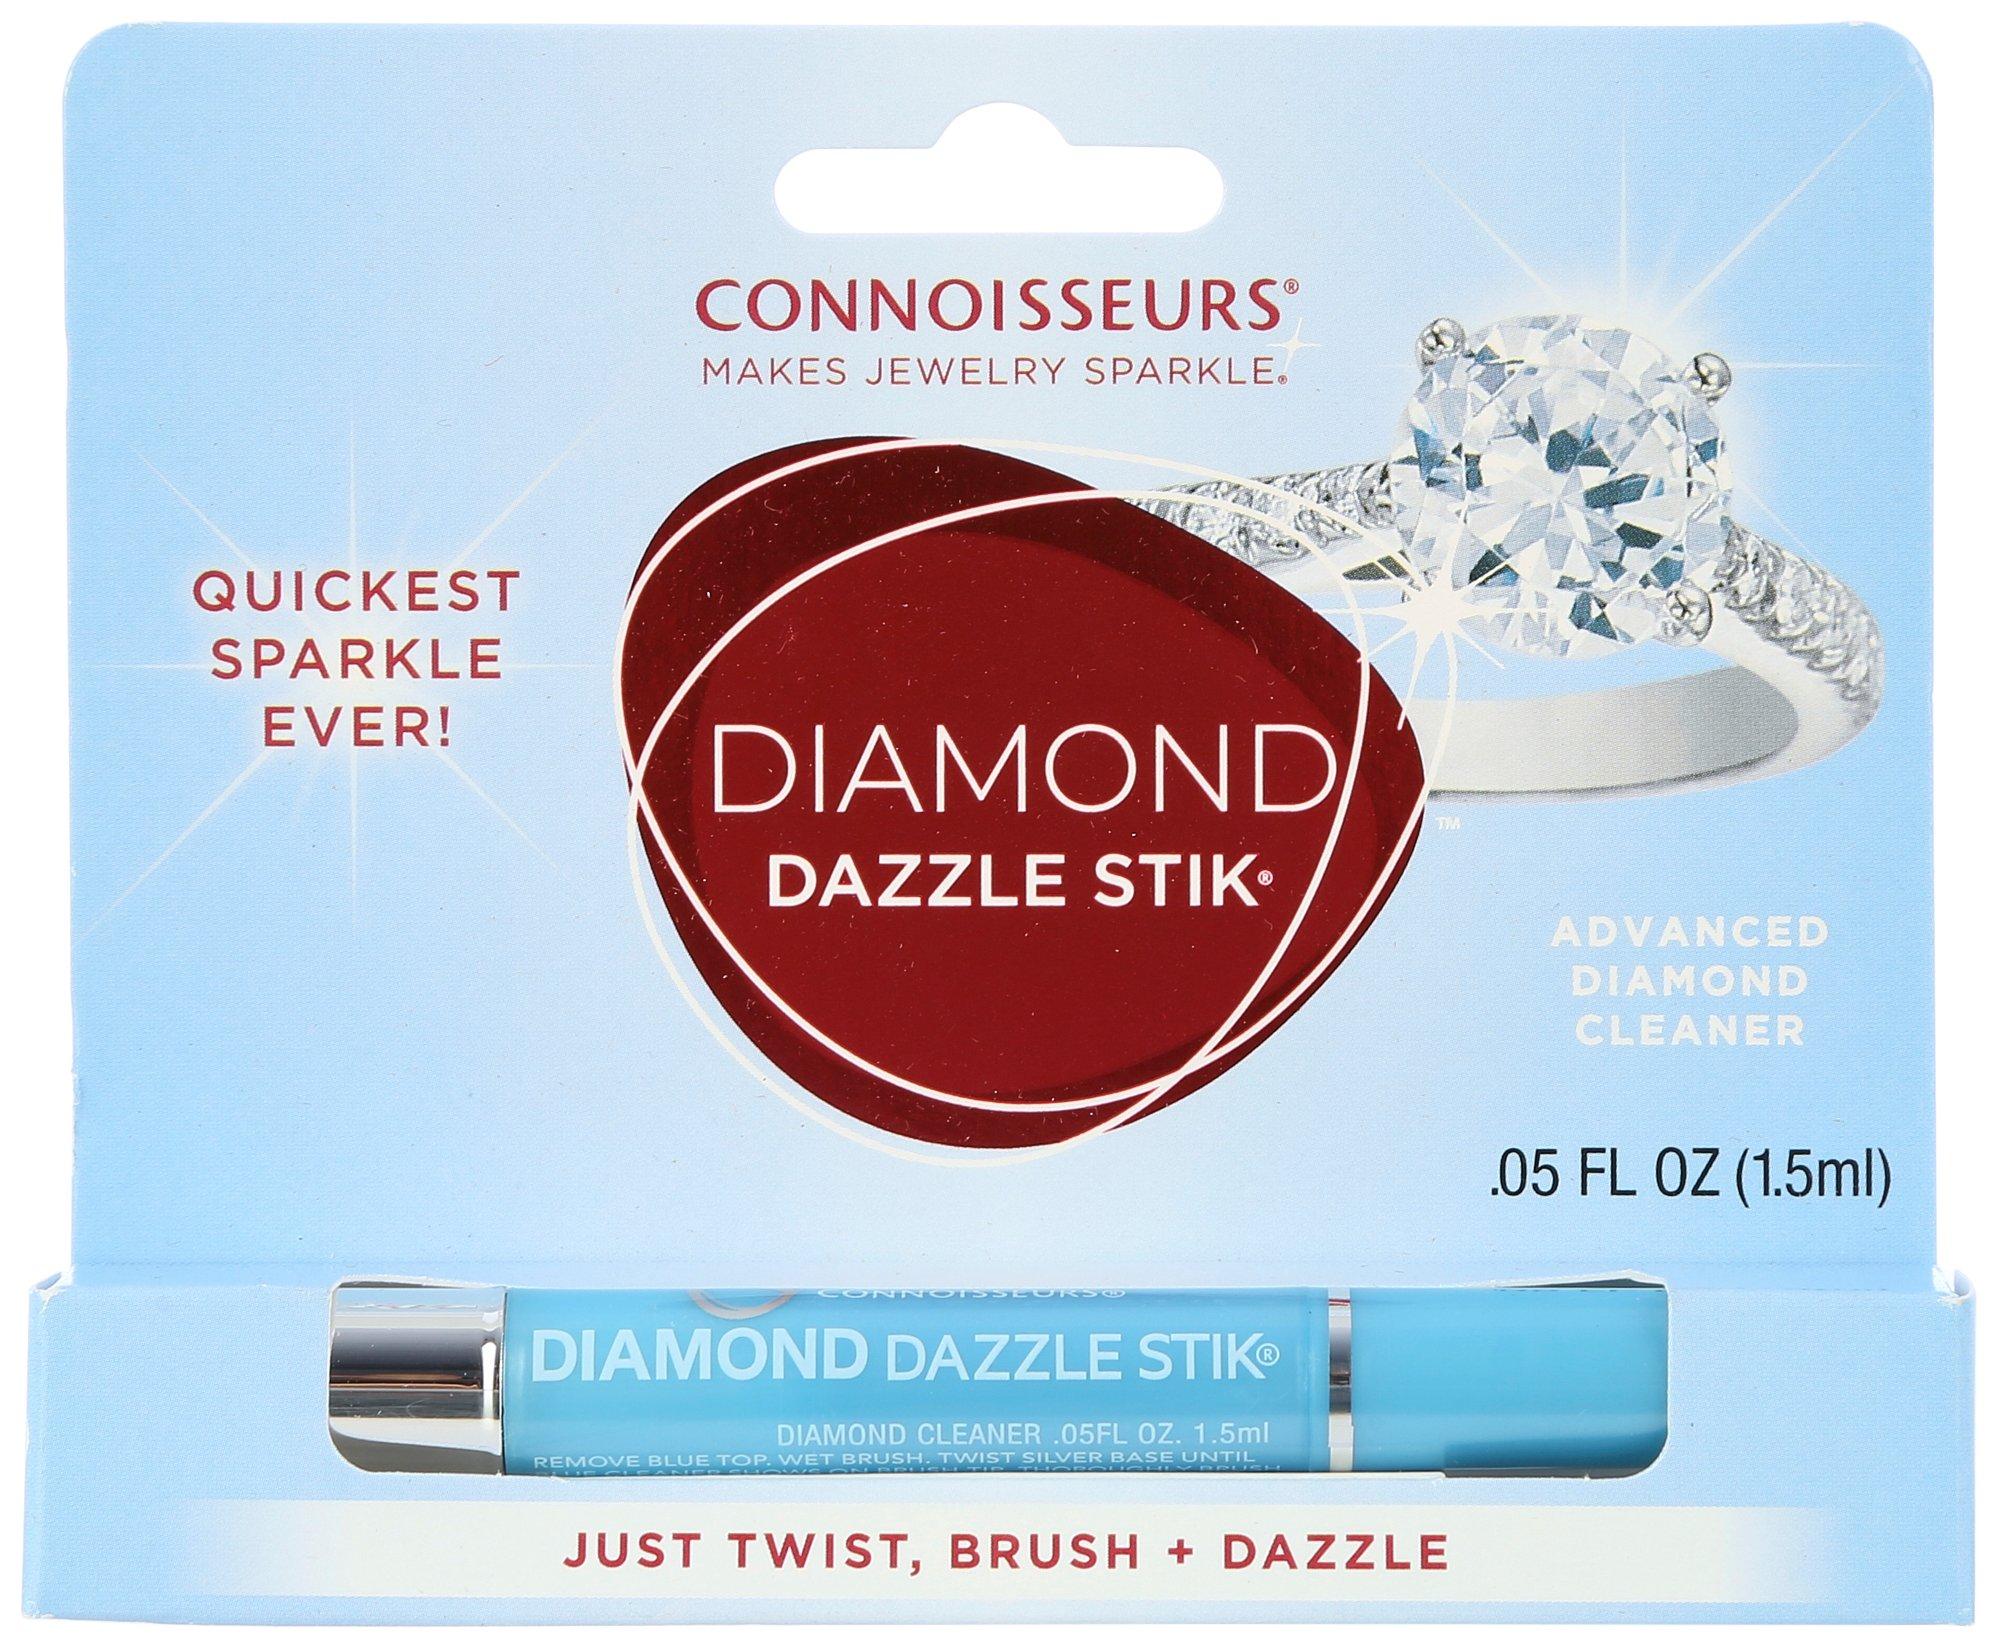 Diamond Dazzle Stik Diamond Cleaner